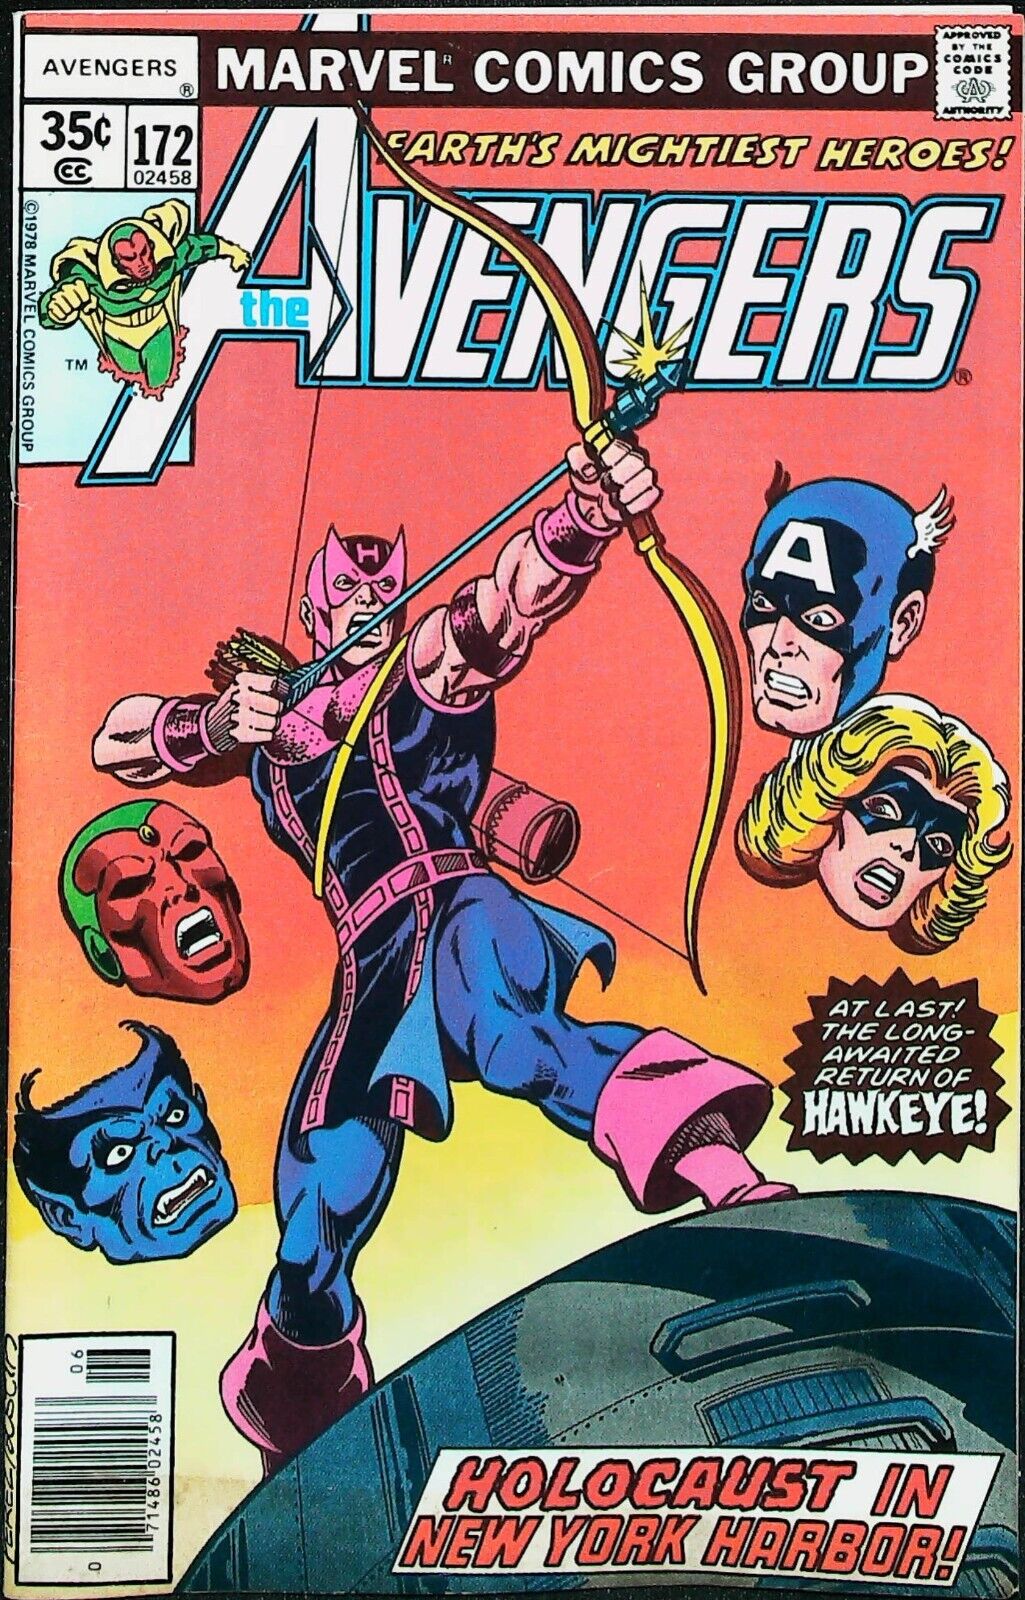 Avengers #172 Vol 1 (1978) KEY ISSUE *Hawkeye Returns to the Team* - Fine-